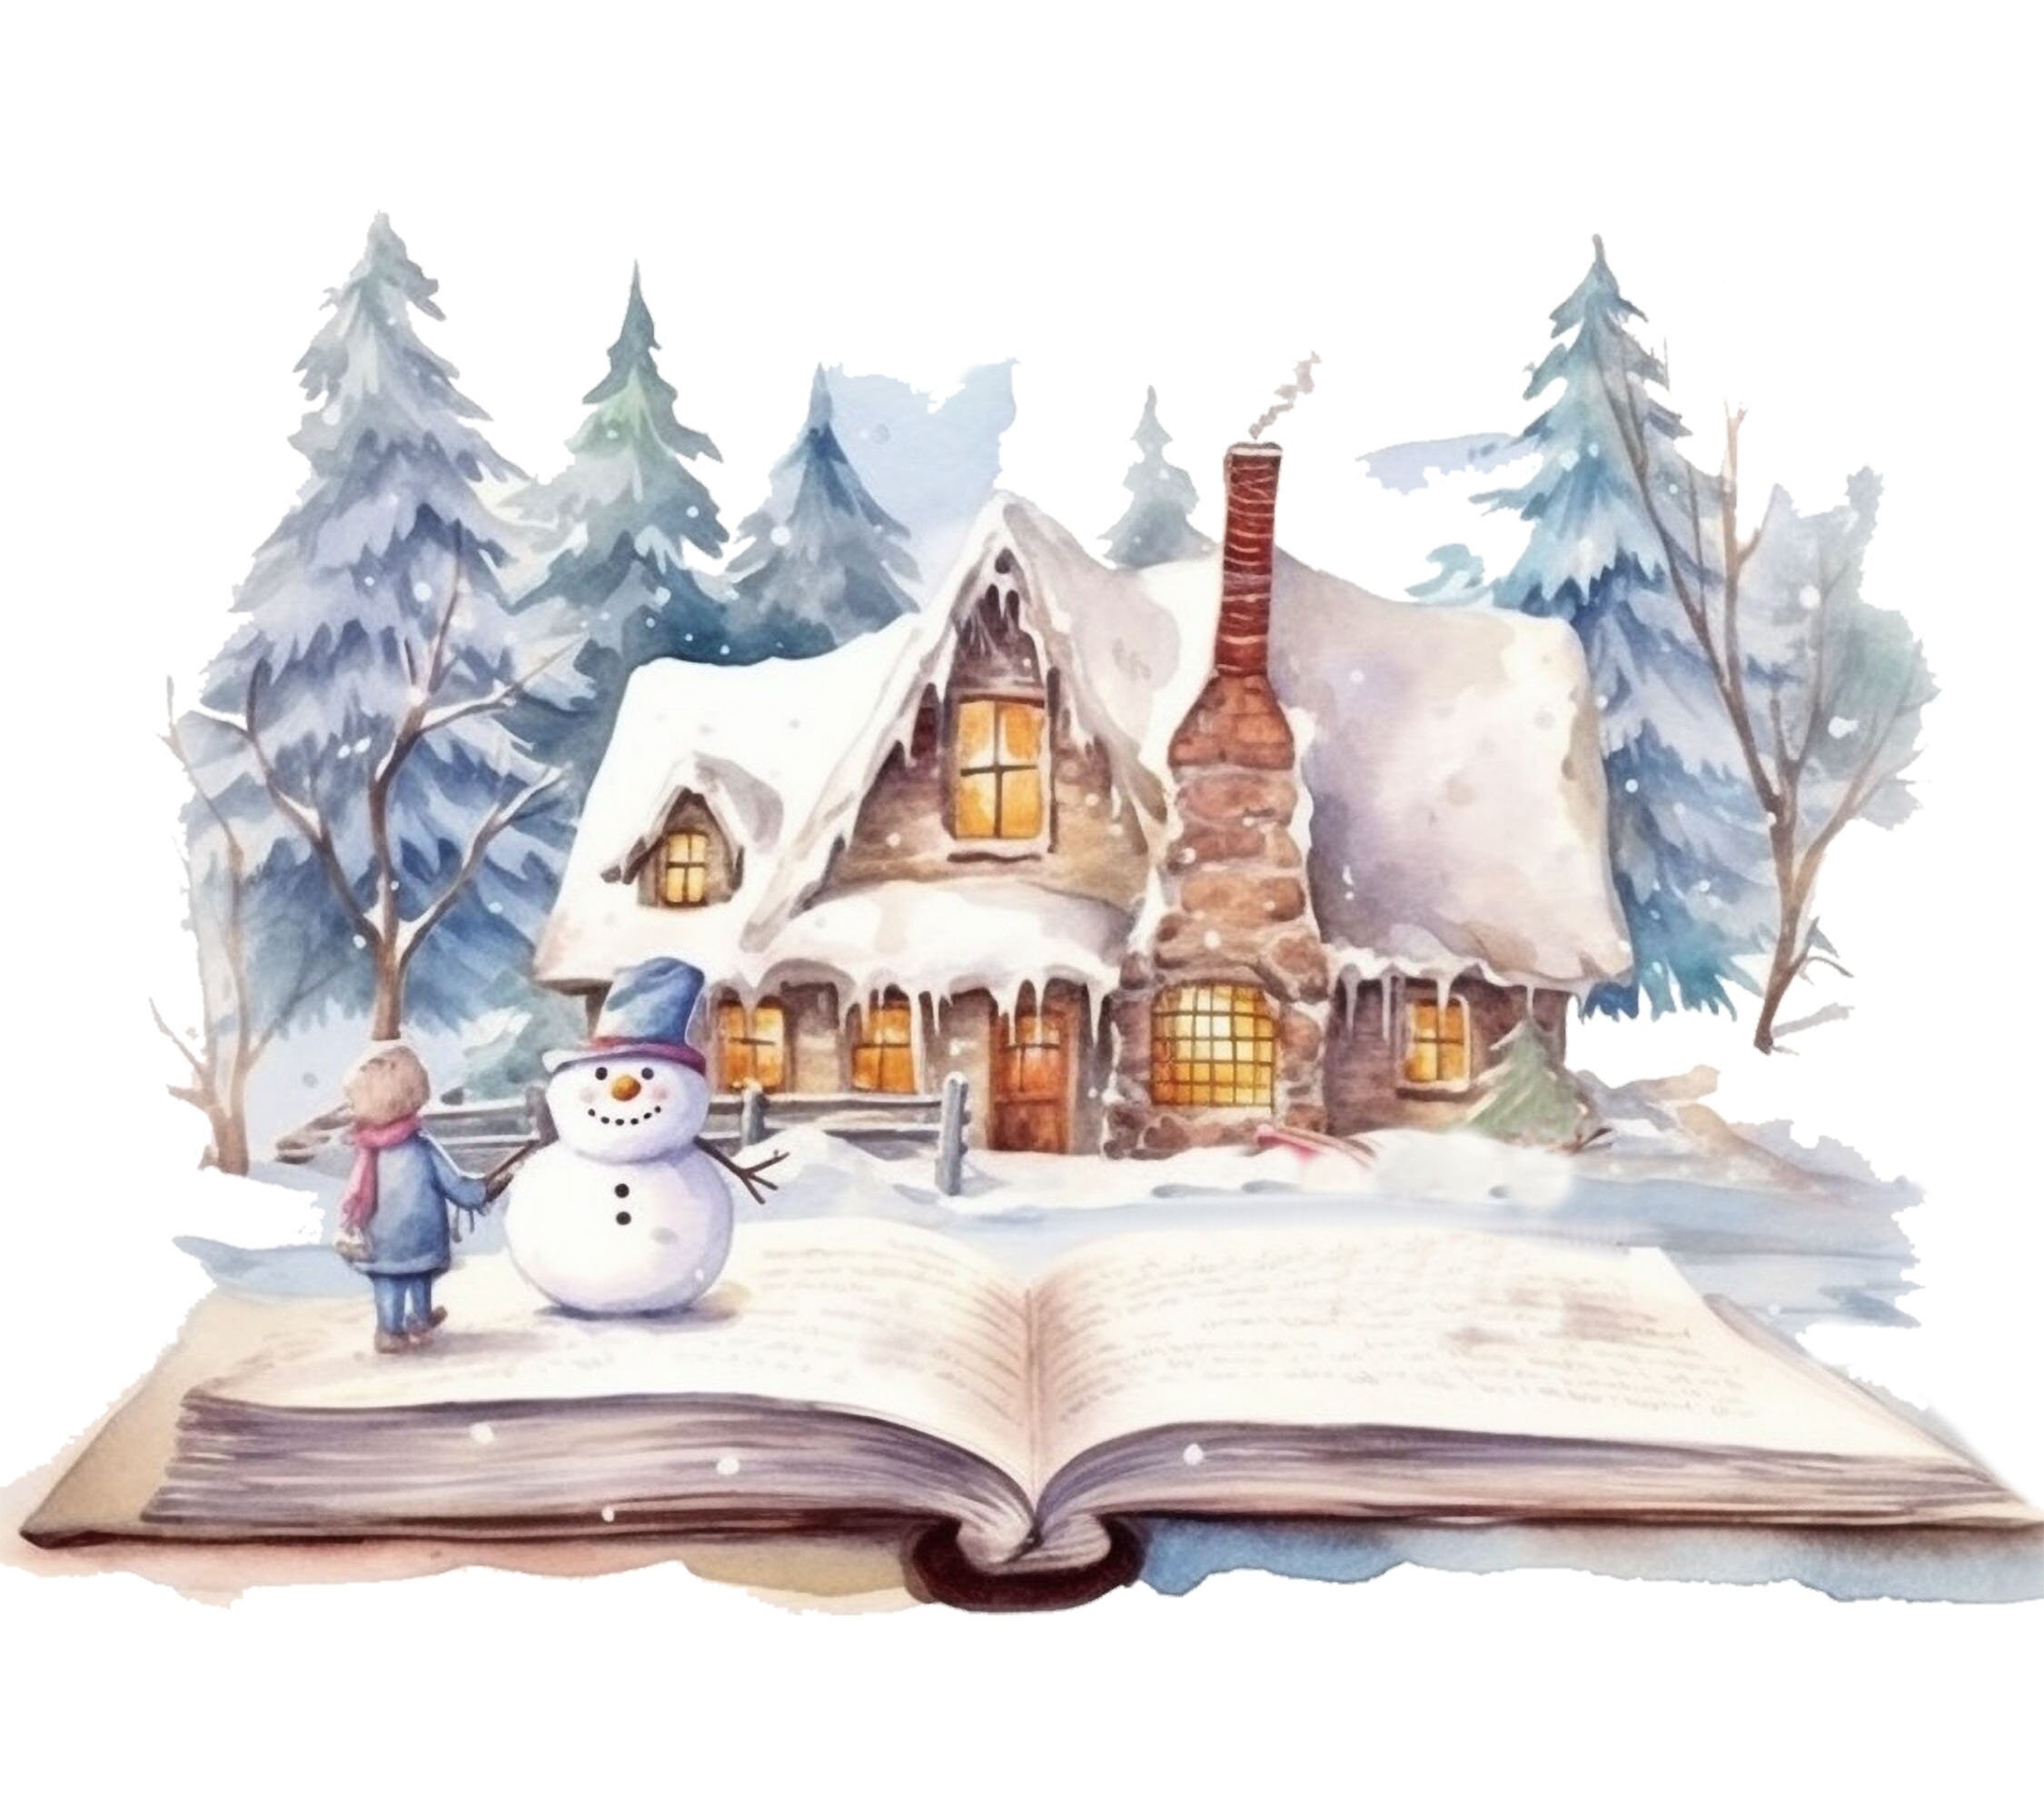 Watercolor Workbook: Winter & Christmas